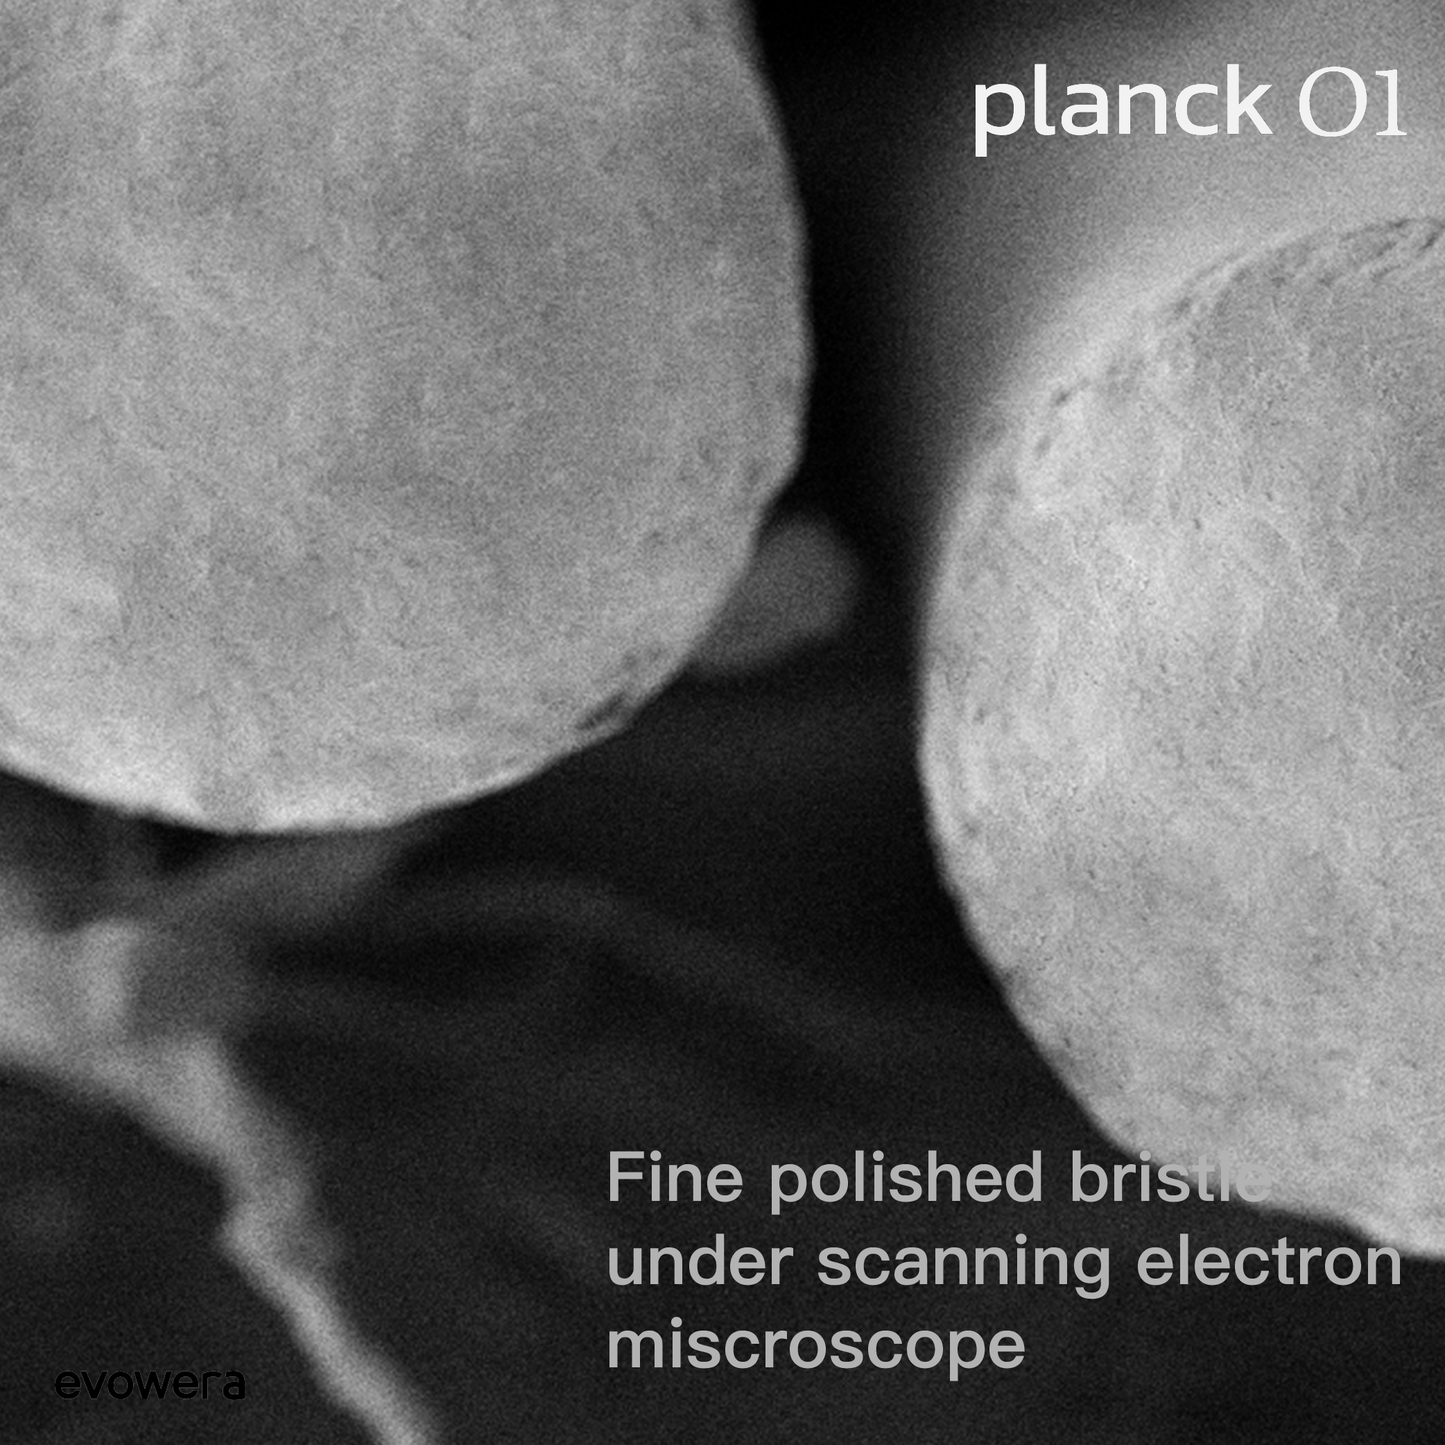 Planck O1 Ersatzbürstenköpfe, 3 Stück